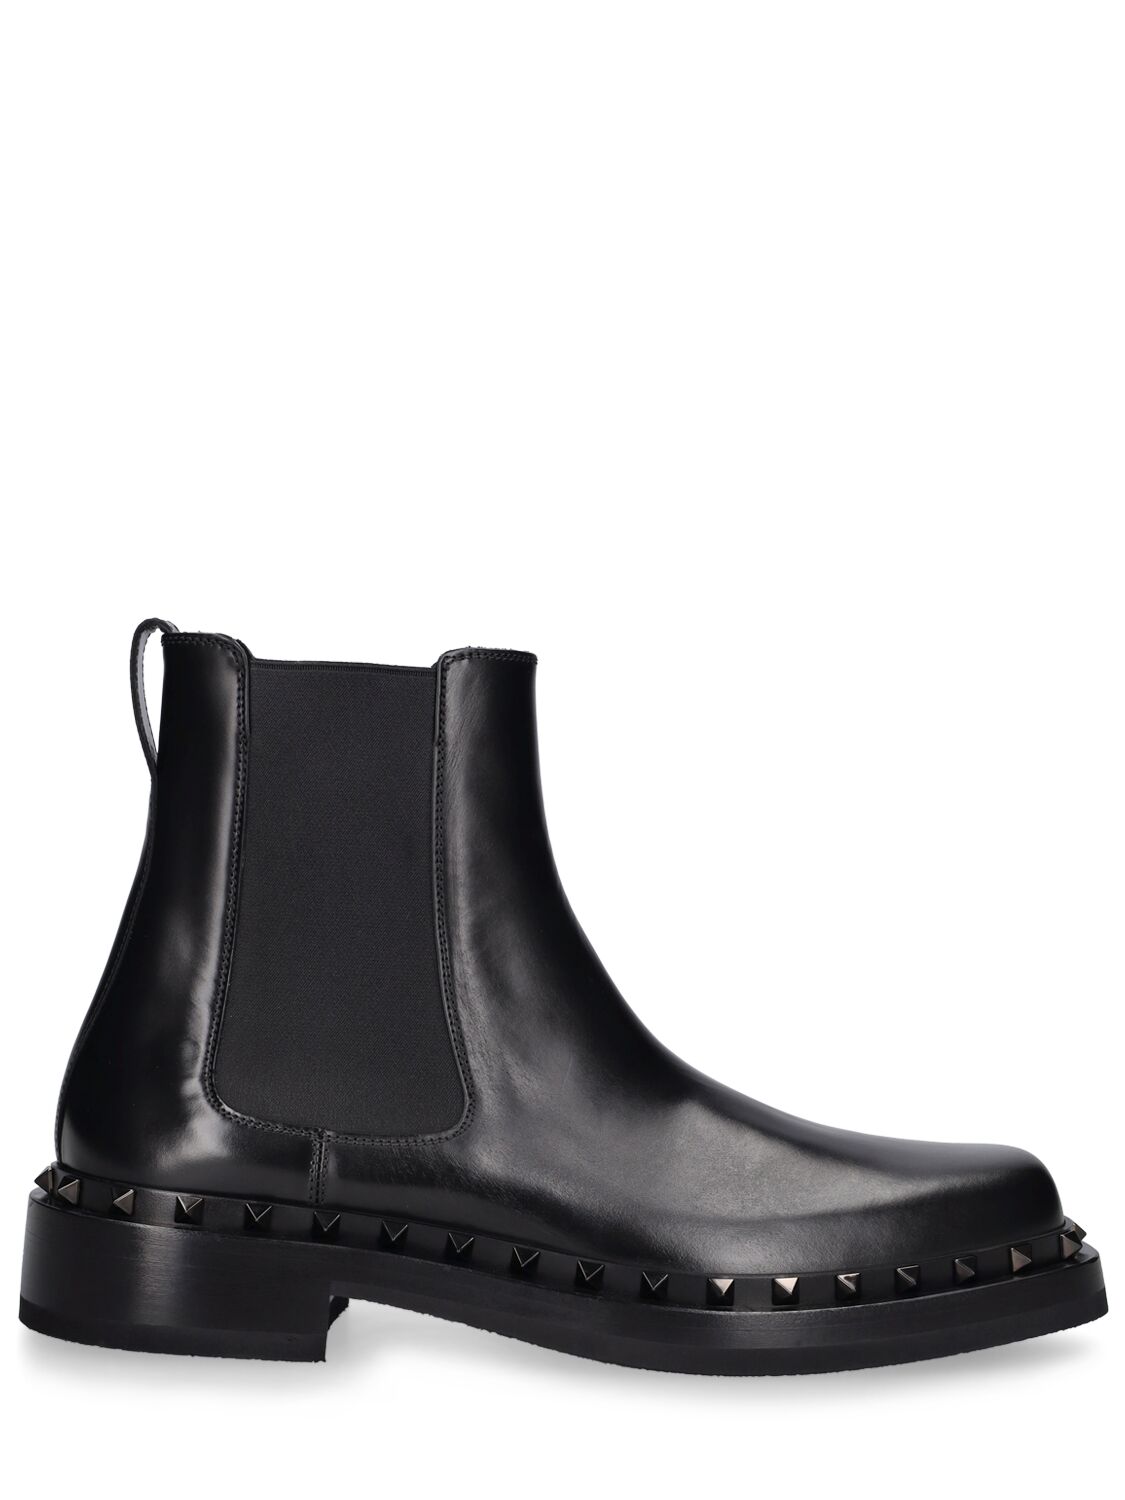 Valentino Garavani 35mm Rockstud Beatle Leather Boots In Black